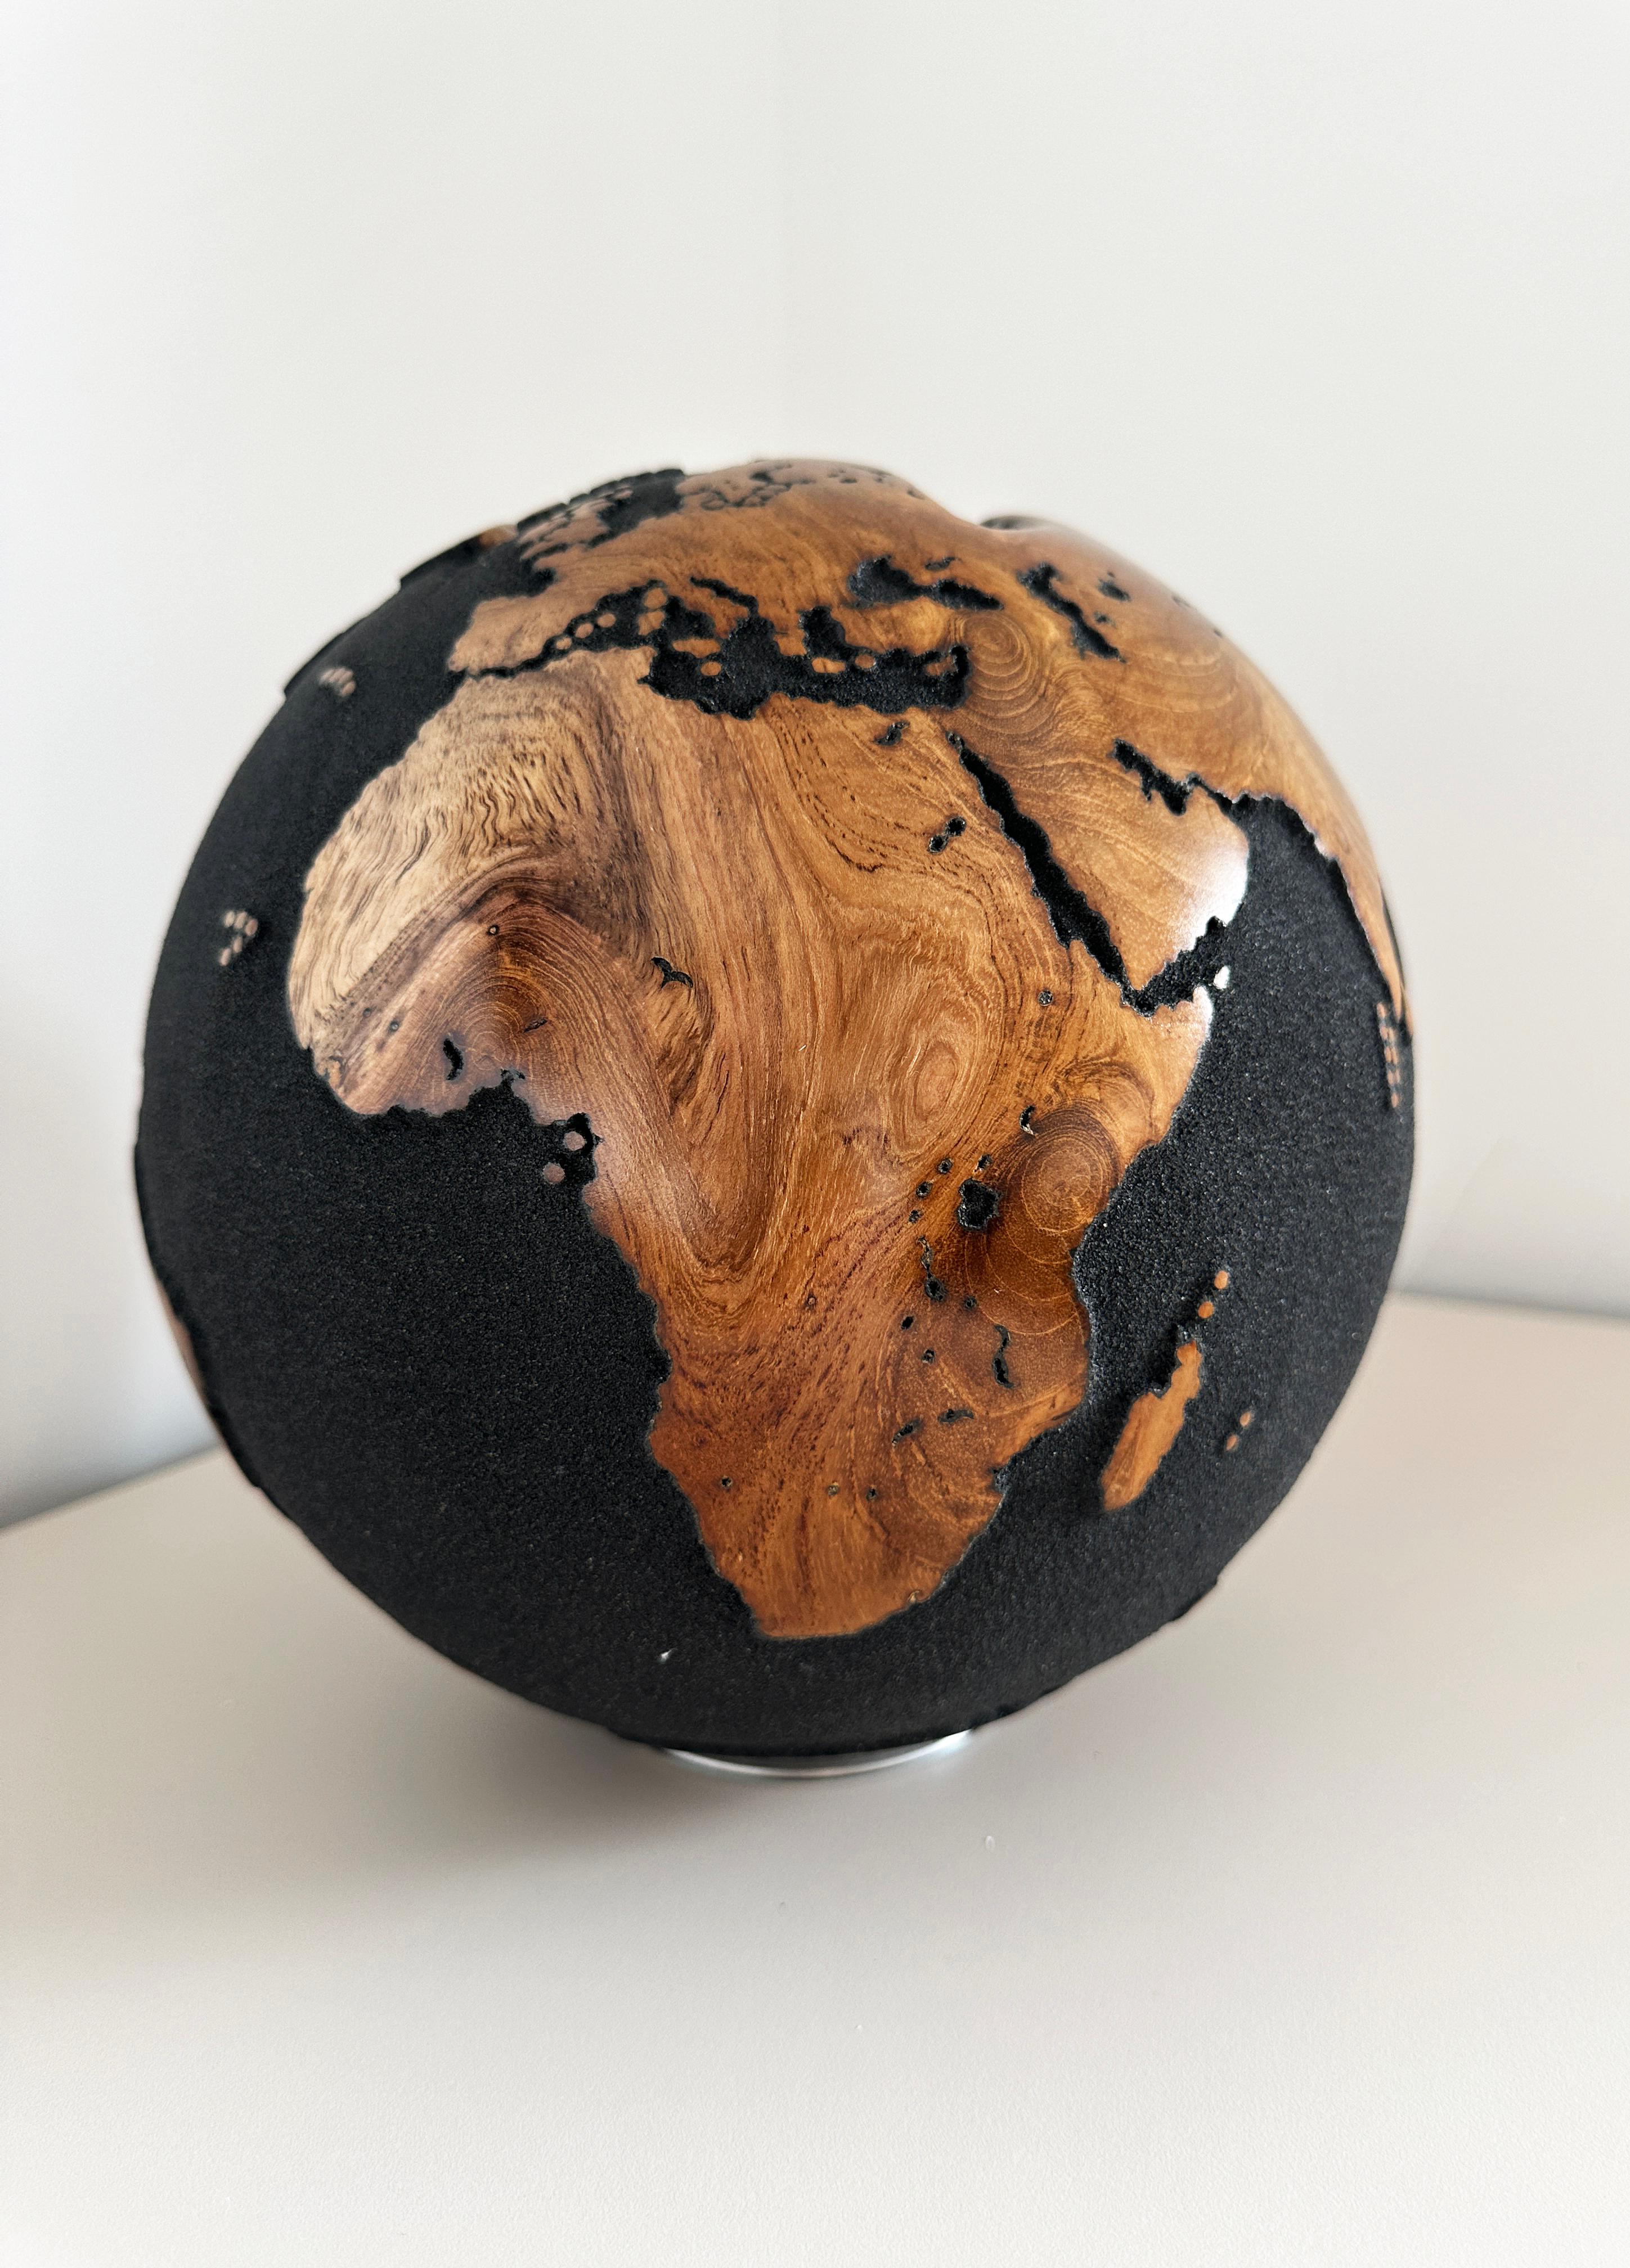 Around the Globe Black Teak by Bruno Helgen - wood globe sculpture  For Sale 14